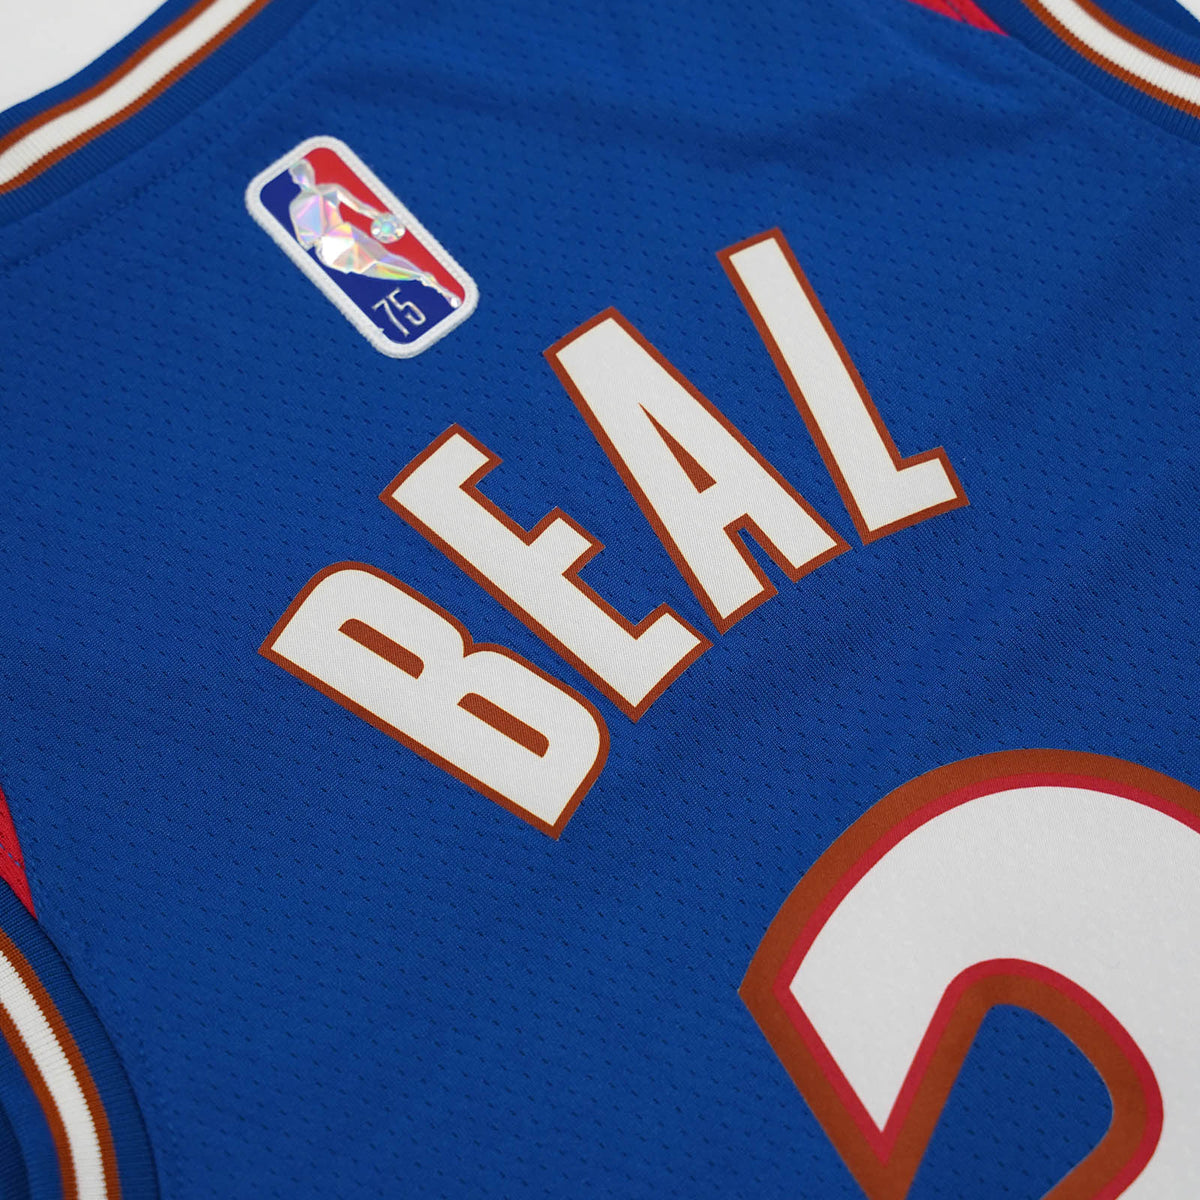 NBA Jersey Day 2021: Bradley Beal in 10 Wizards alternate uniforms